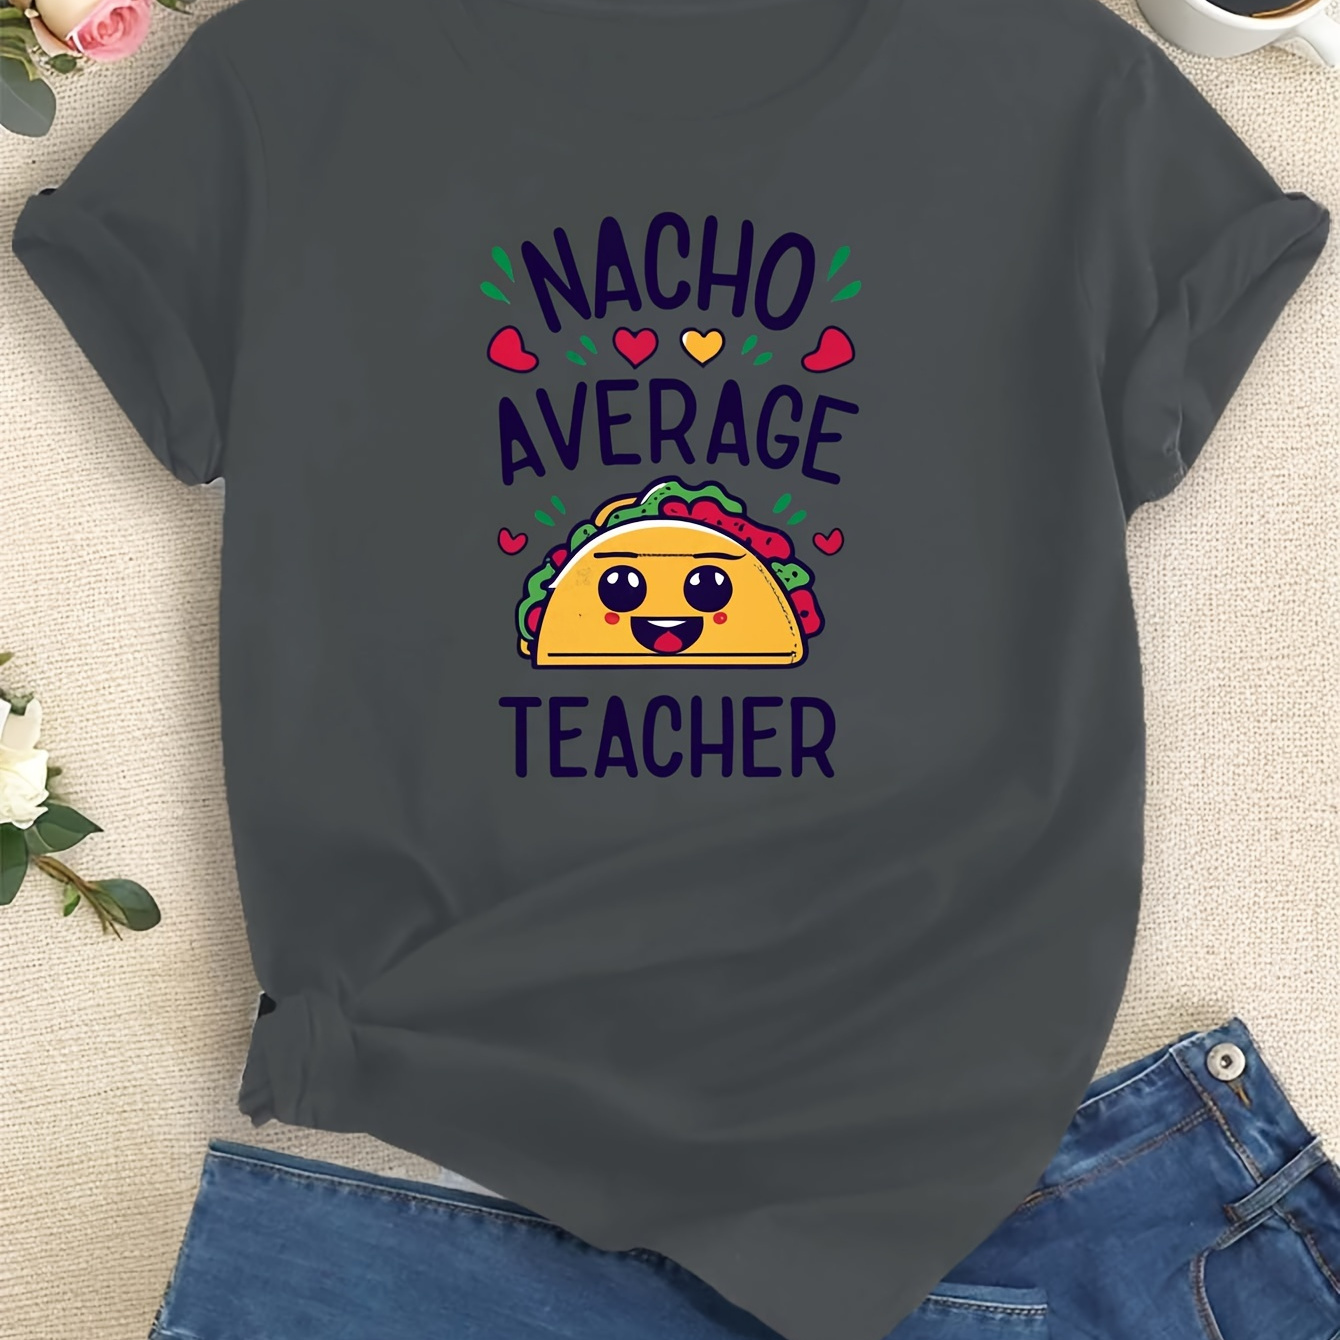 

Nacho Average Teacher Print T-shirt, Short Sleeve Crew Neck Casual Top For Summer & Spring, Women's Clothing